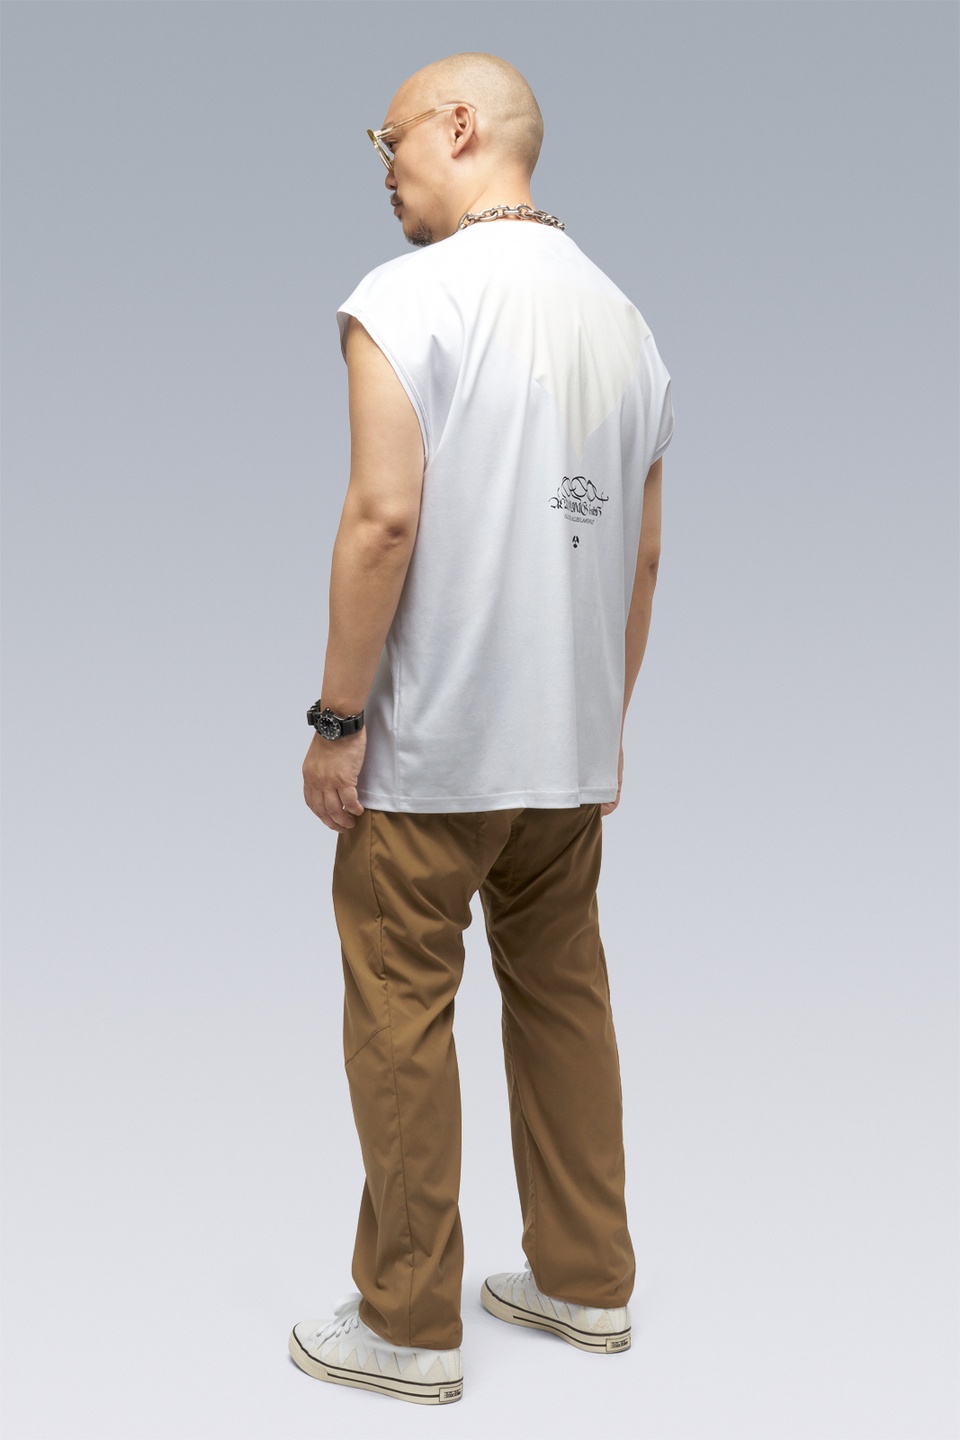 S25-PR-A 100% Cotton Mercerized Sleeveless T-shirt White - 4